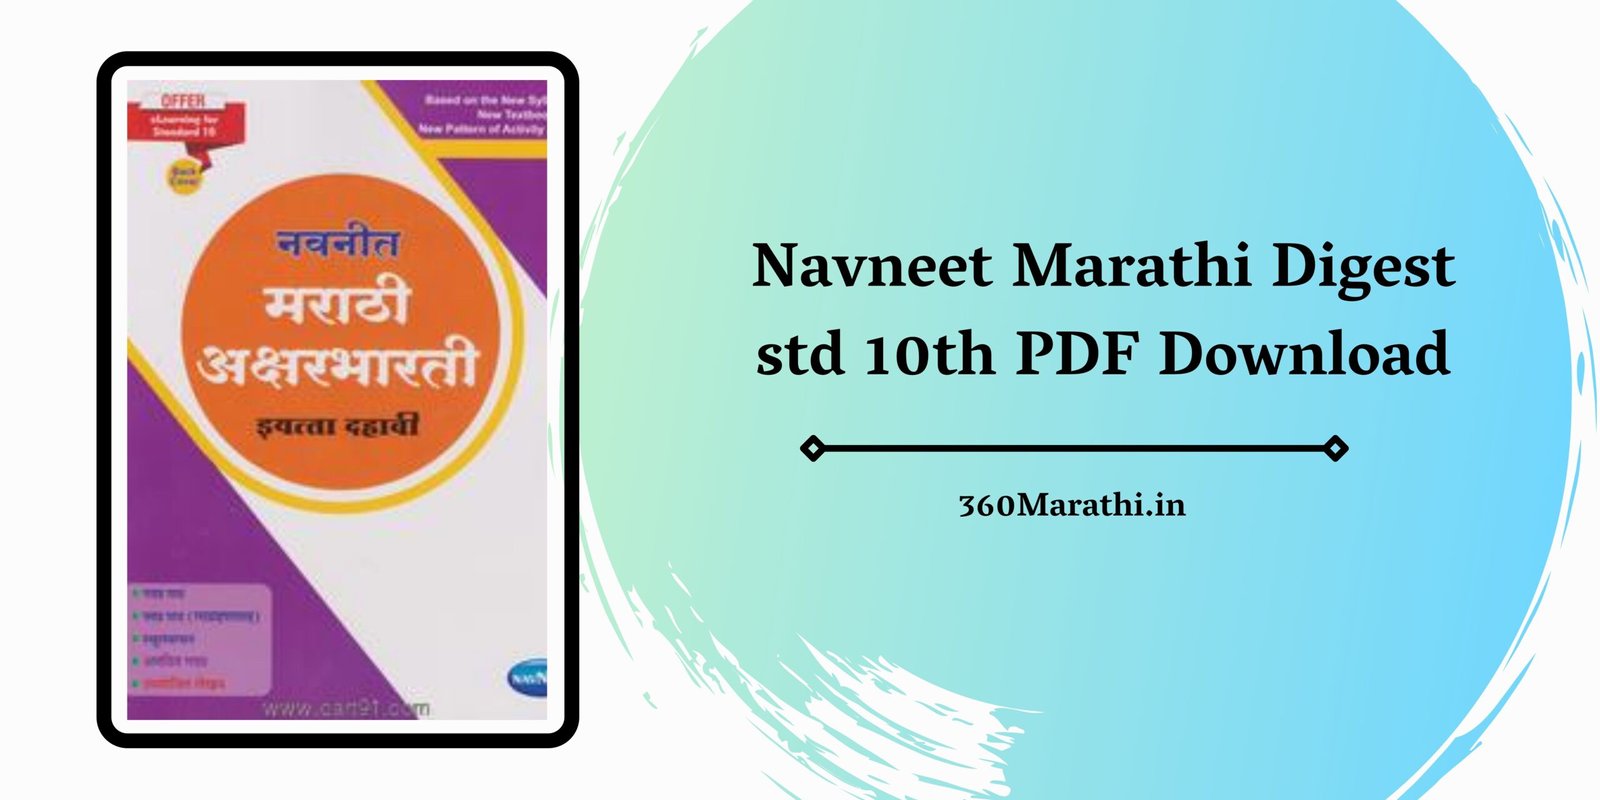 Navneet Marathi Digest std 10th PDF Download